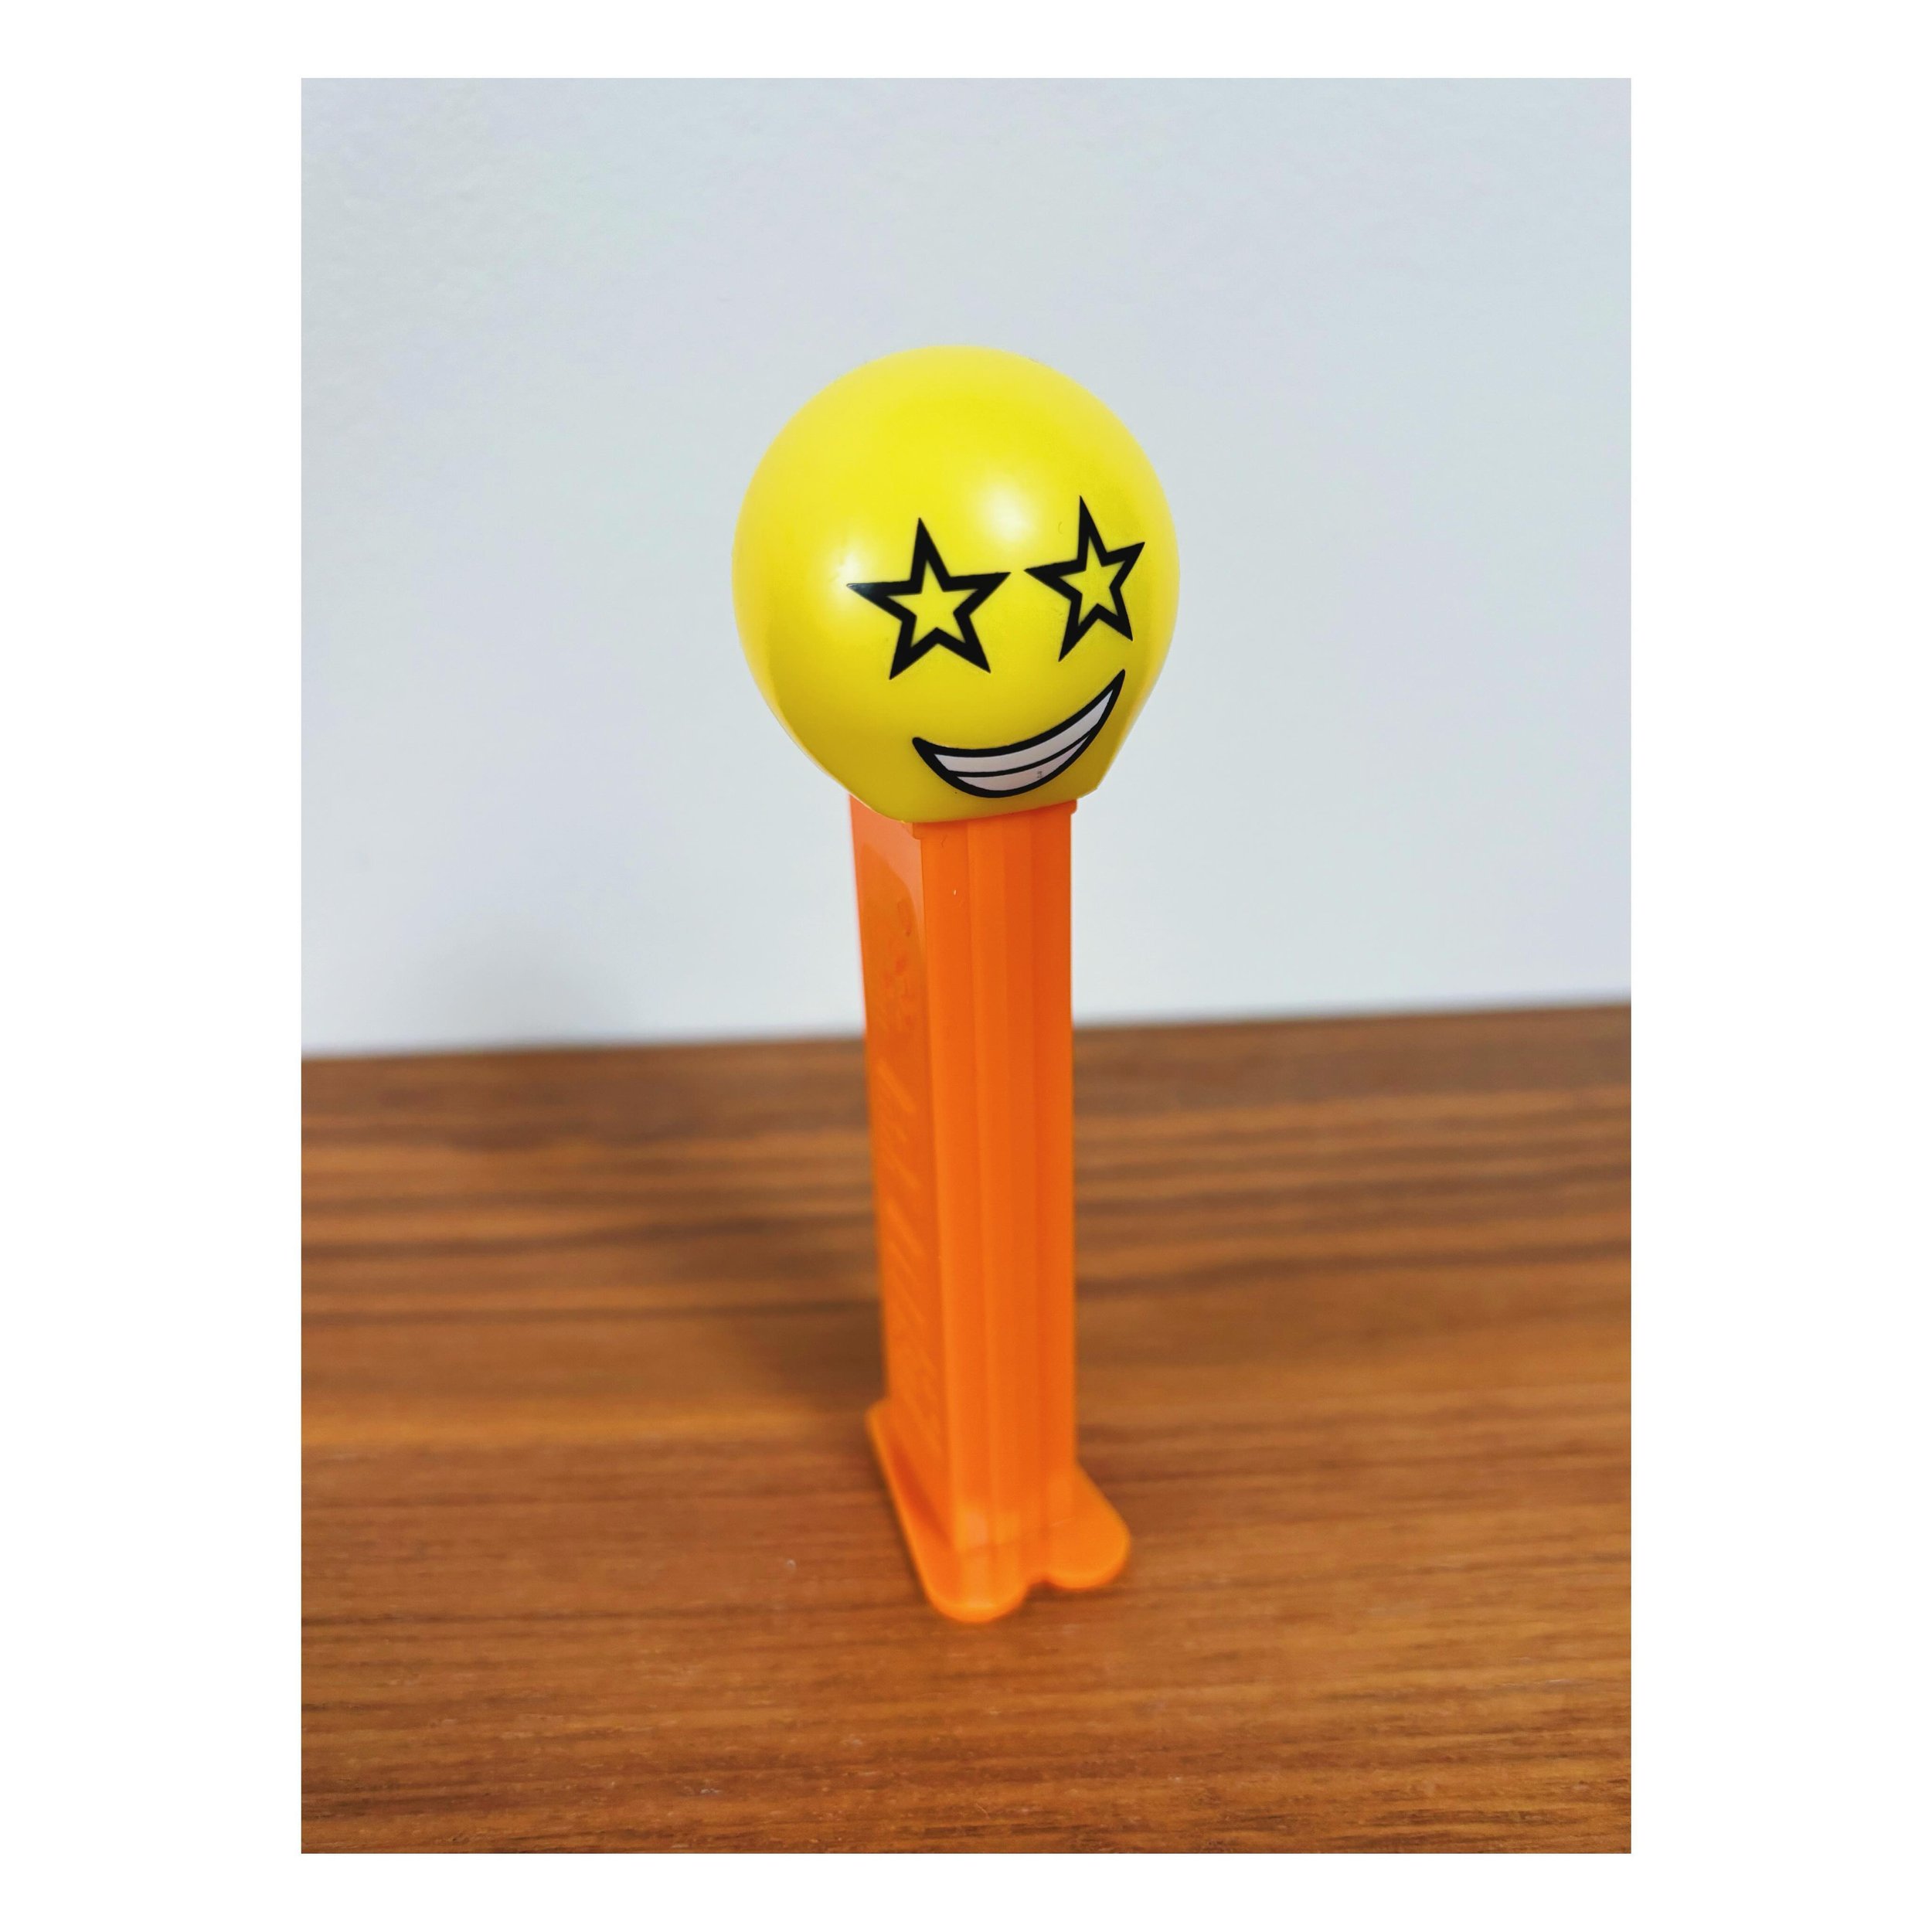 Starry-eyed 🤩
.
.
#pez #pezdispenser #candy #emoji